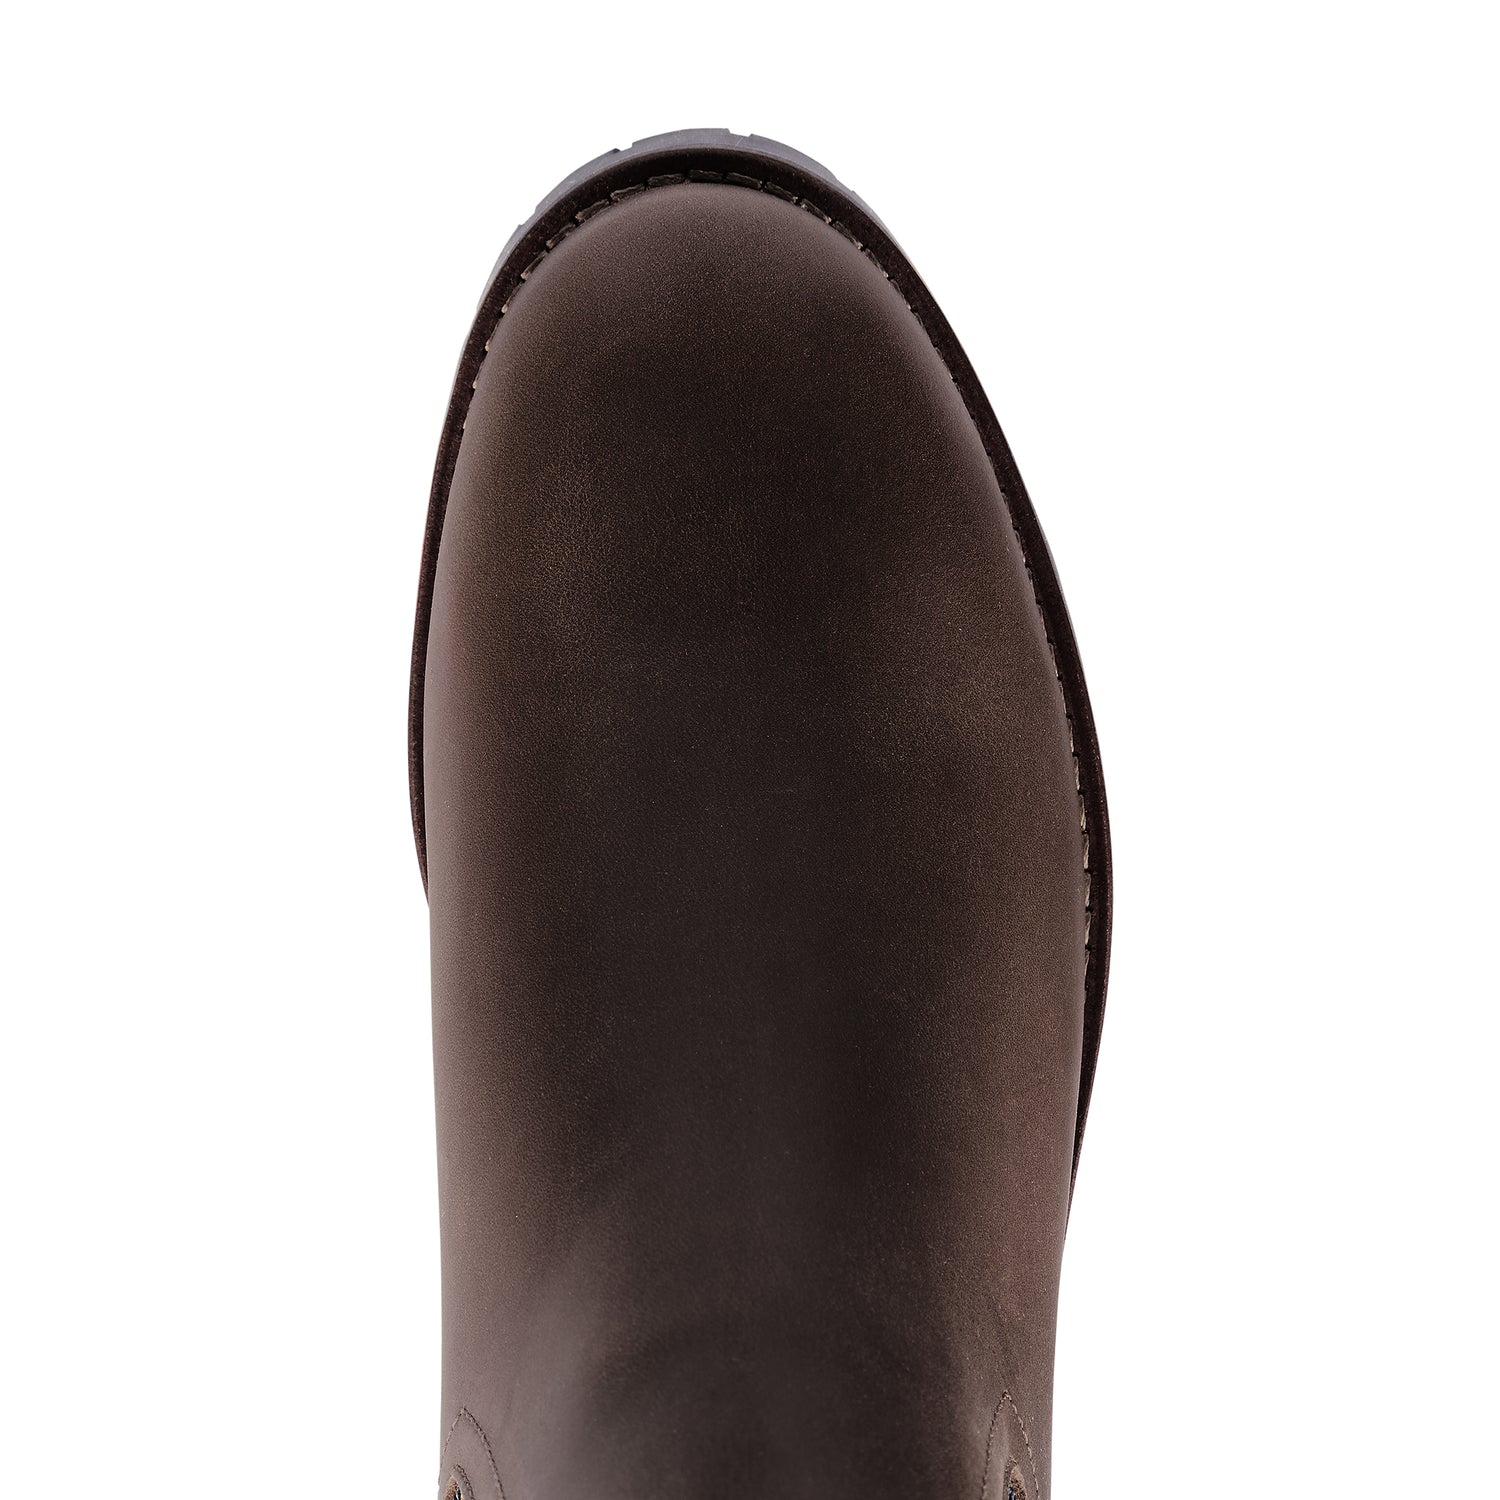 Sheepskin Boudica Boot - Mahogany Leather